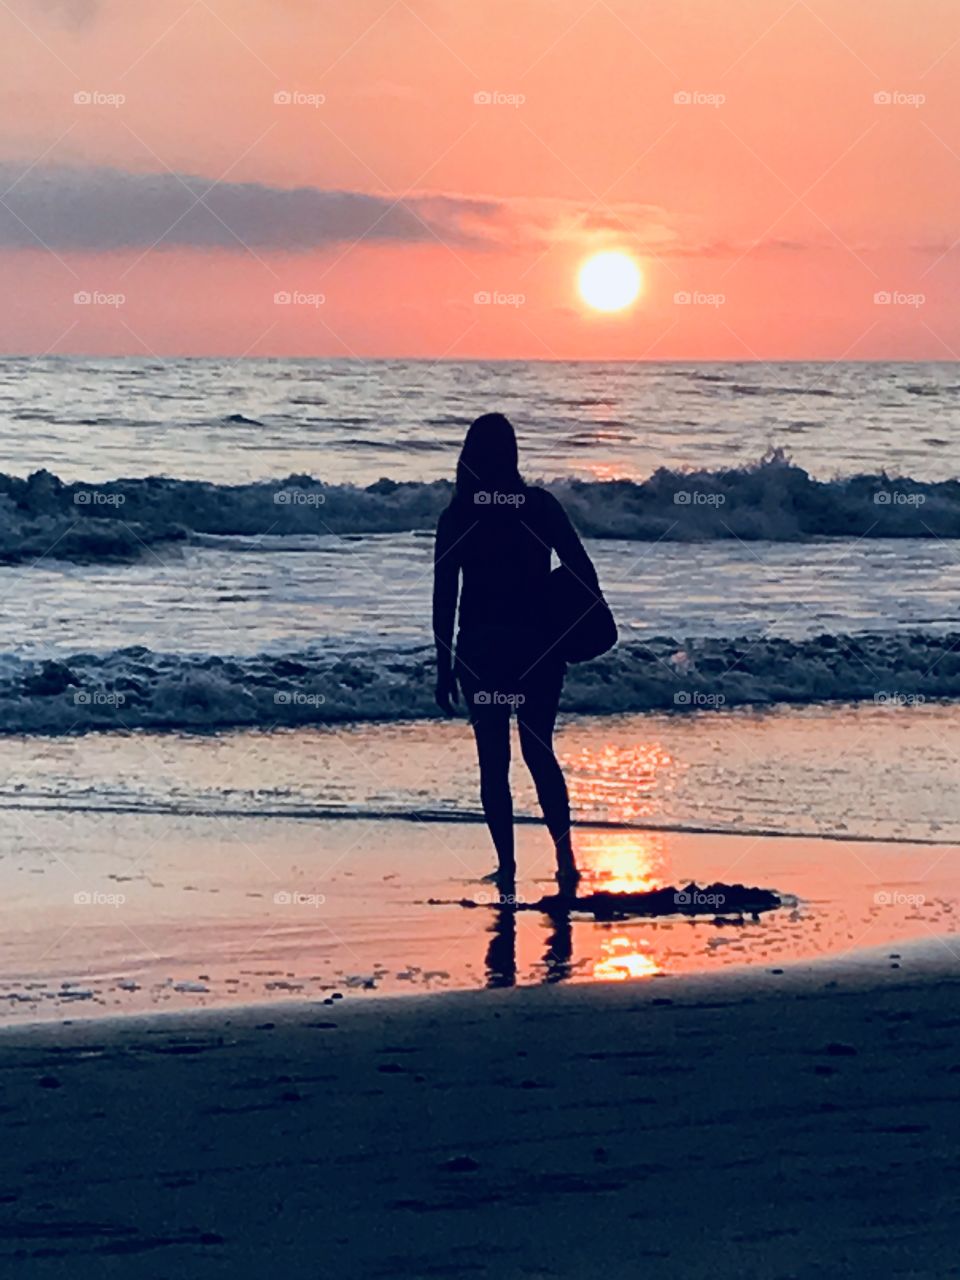 Surfer gal at sunset